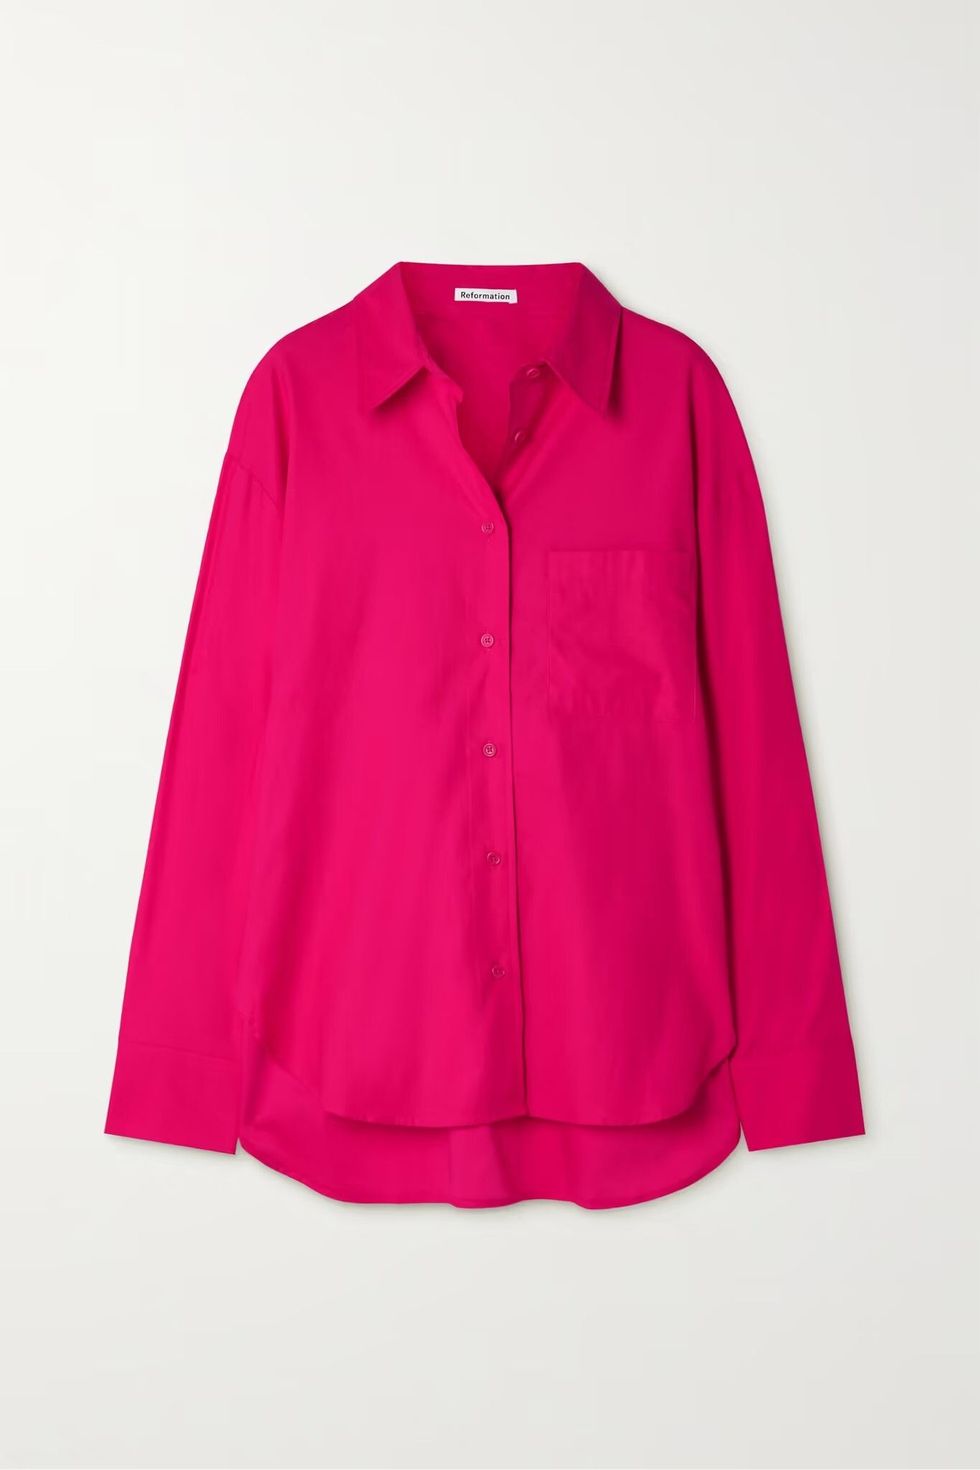 夏天寬鬆襯衫推薦：Reformation桃紅色棉質襯衫